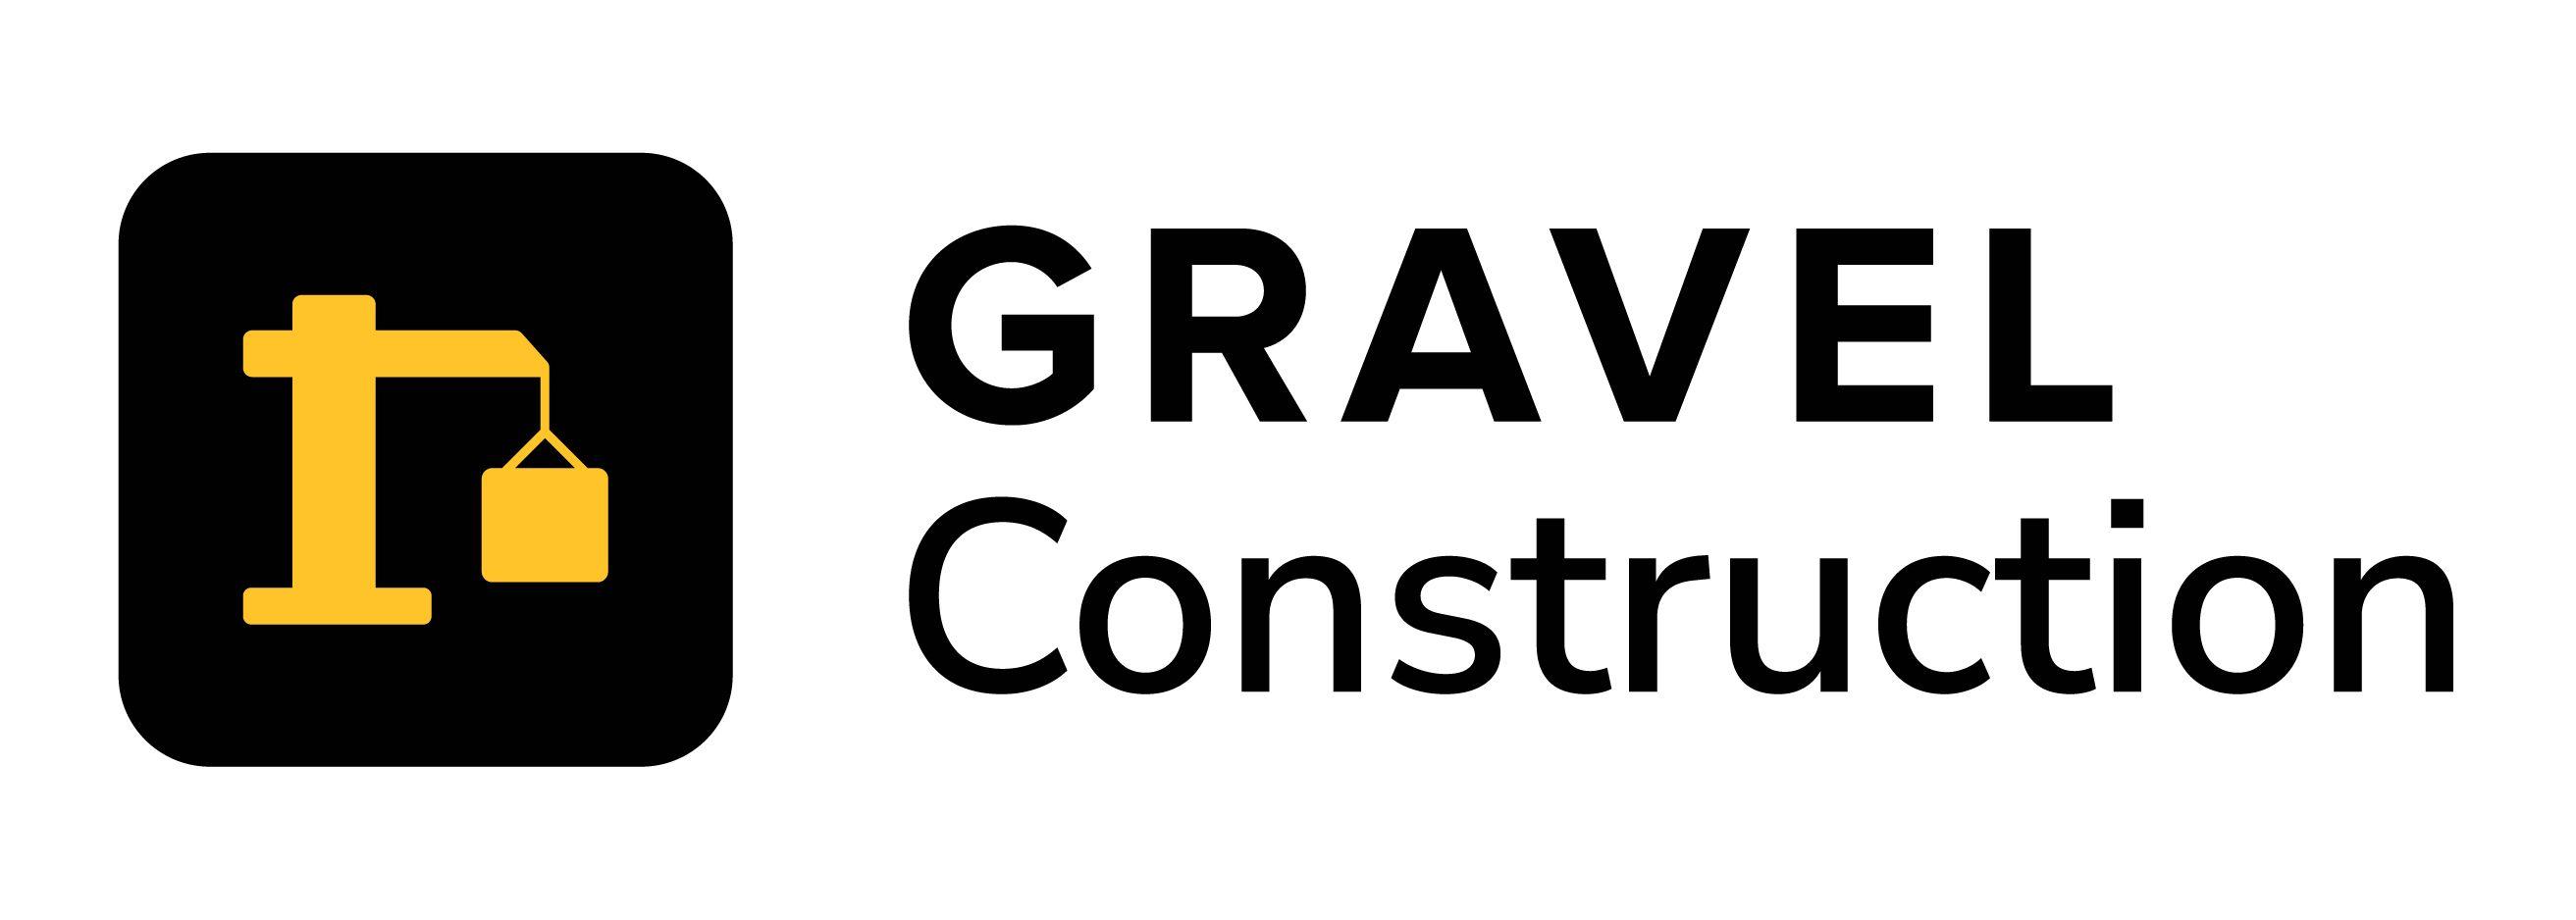 Gravel Construction